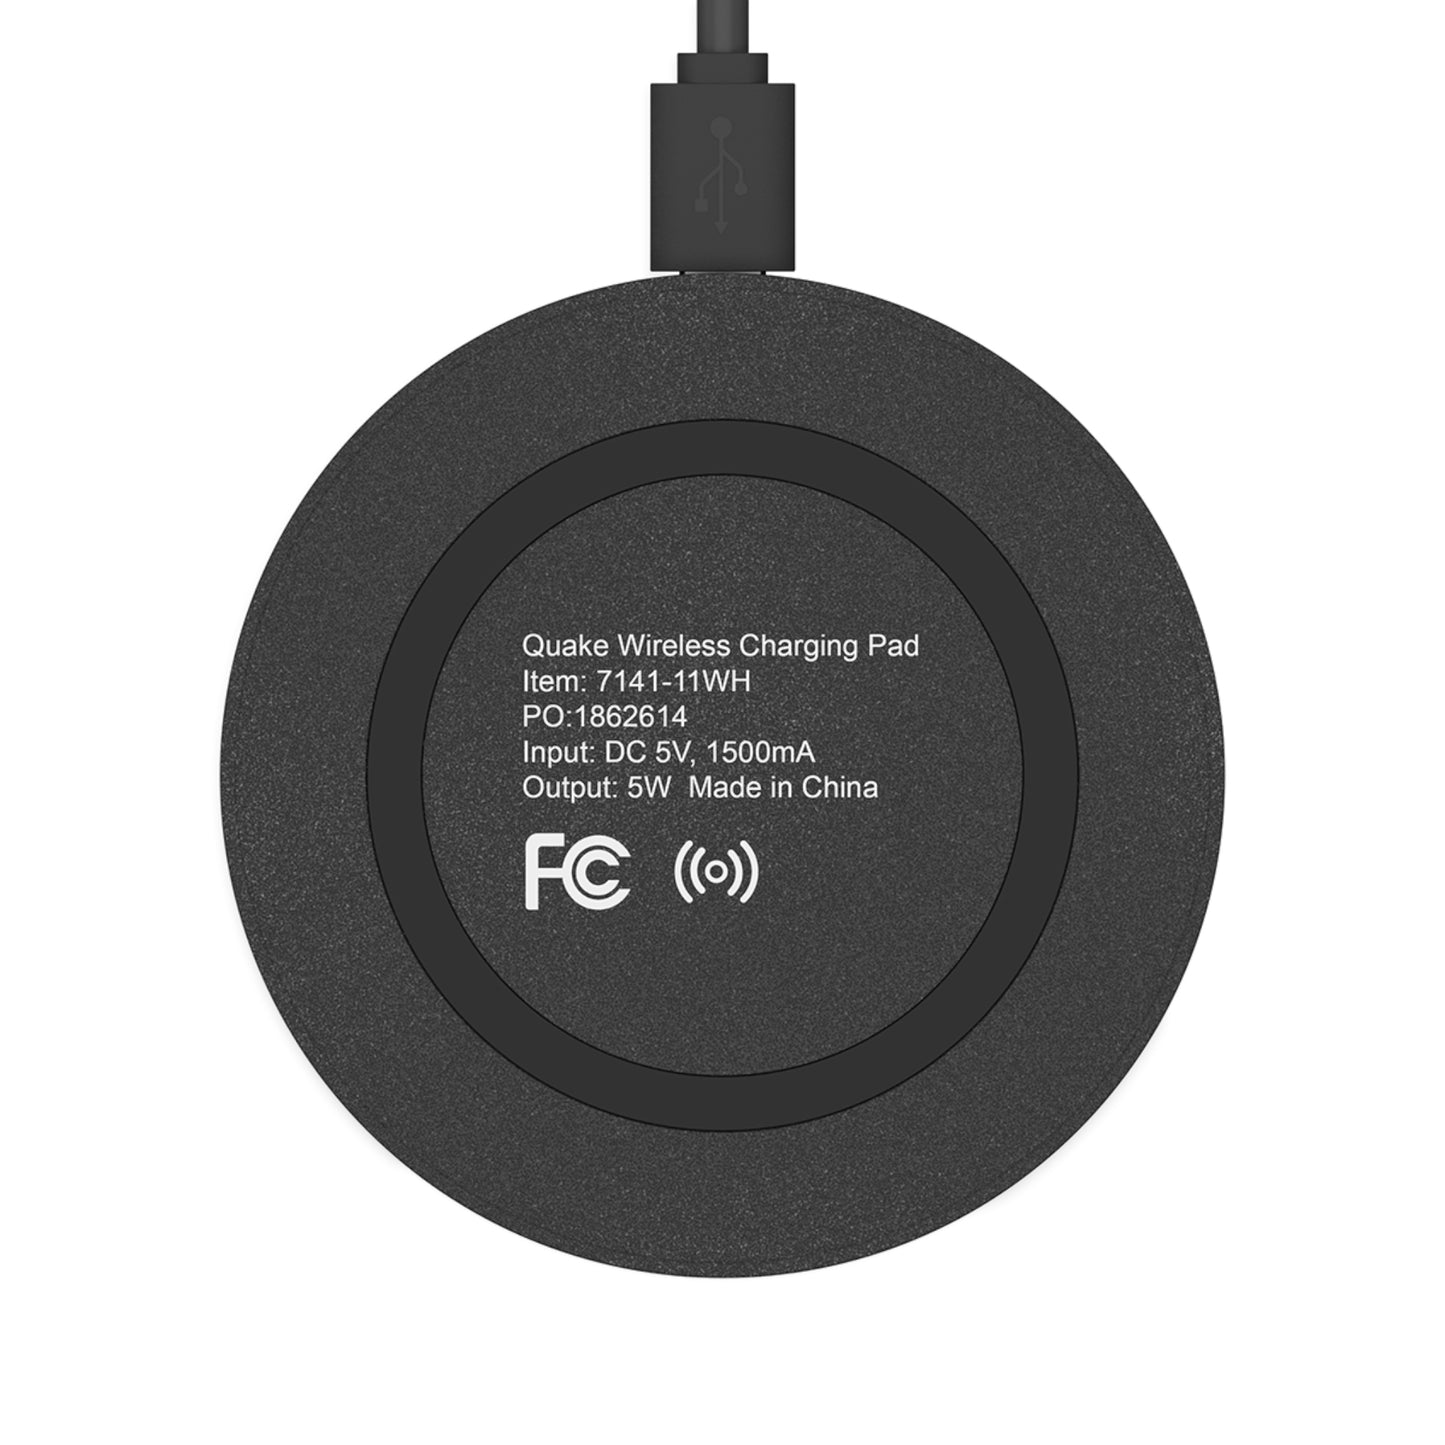 Quake Wireless Charging Pad - INFINITI of Flemington